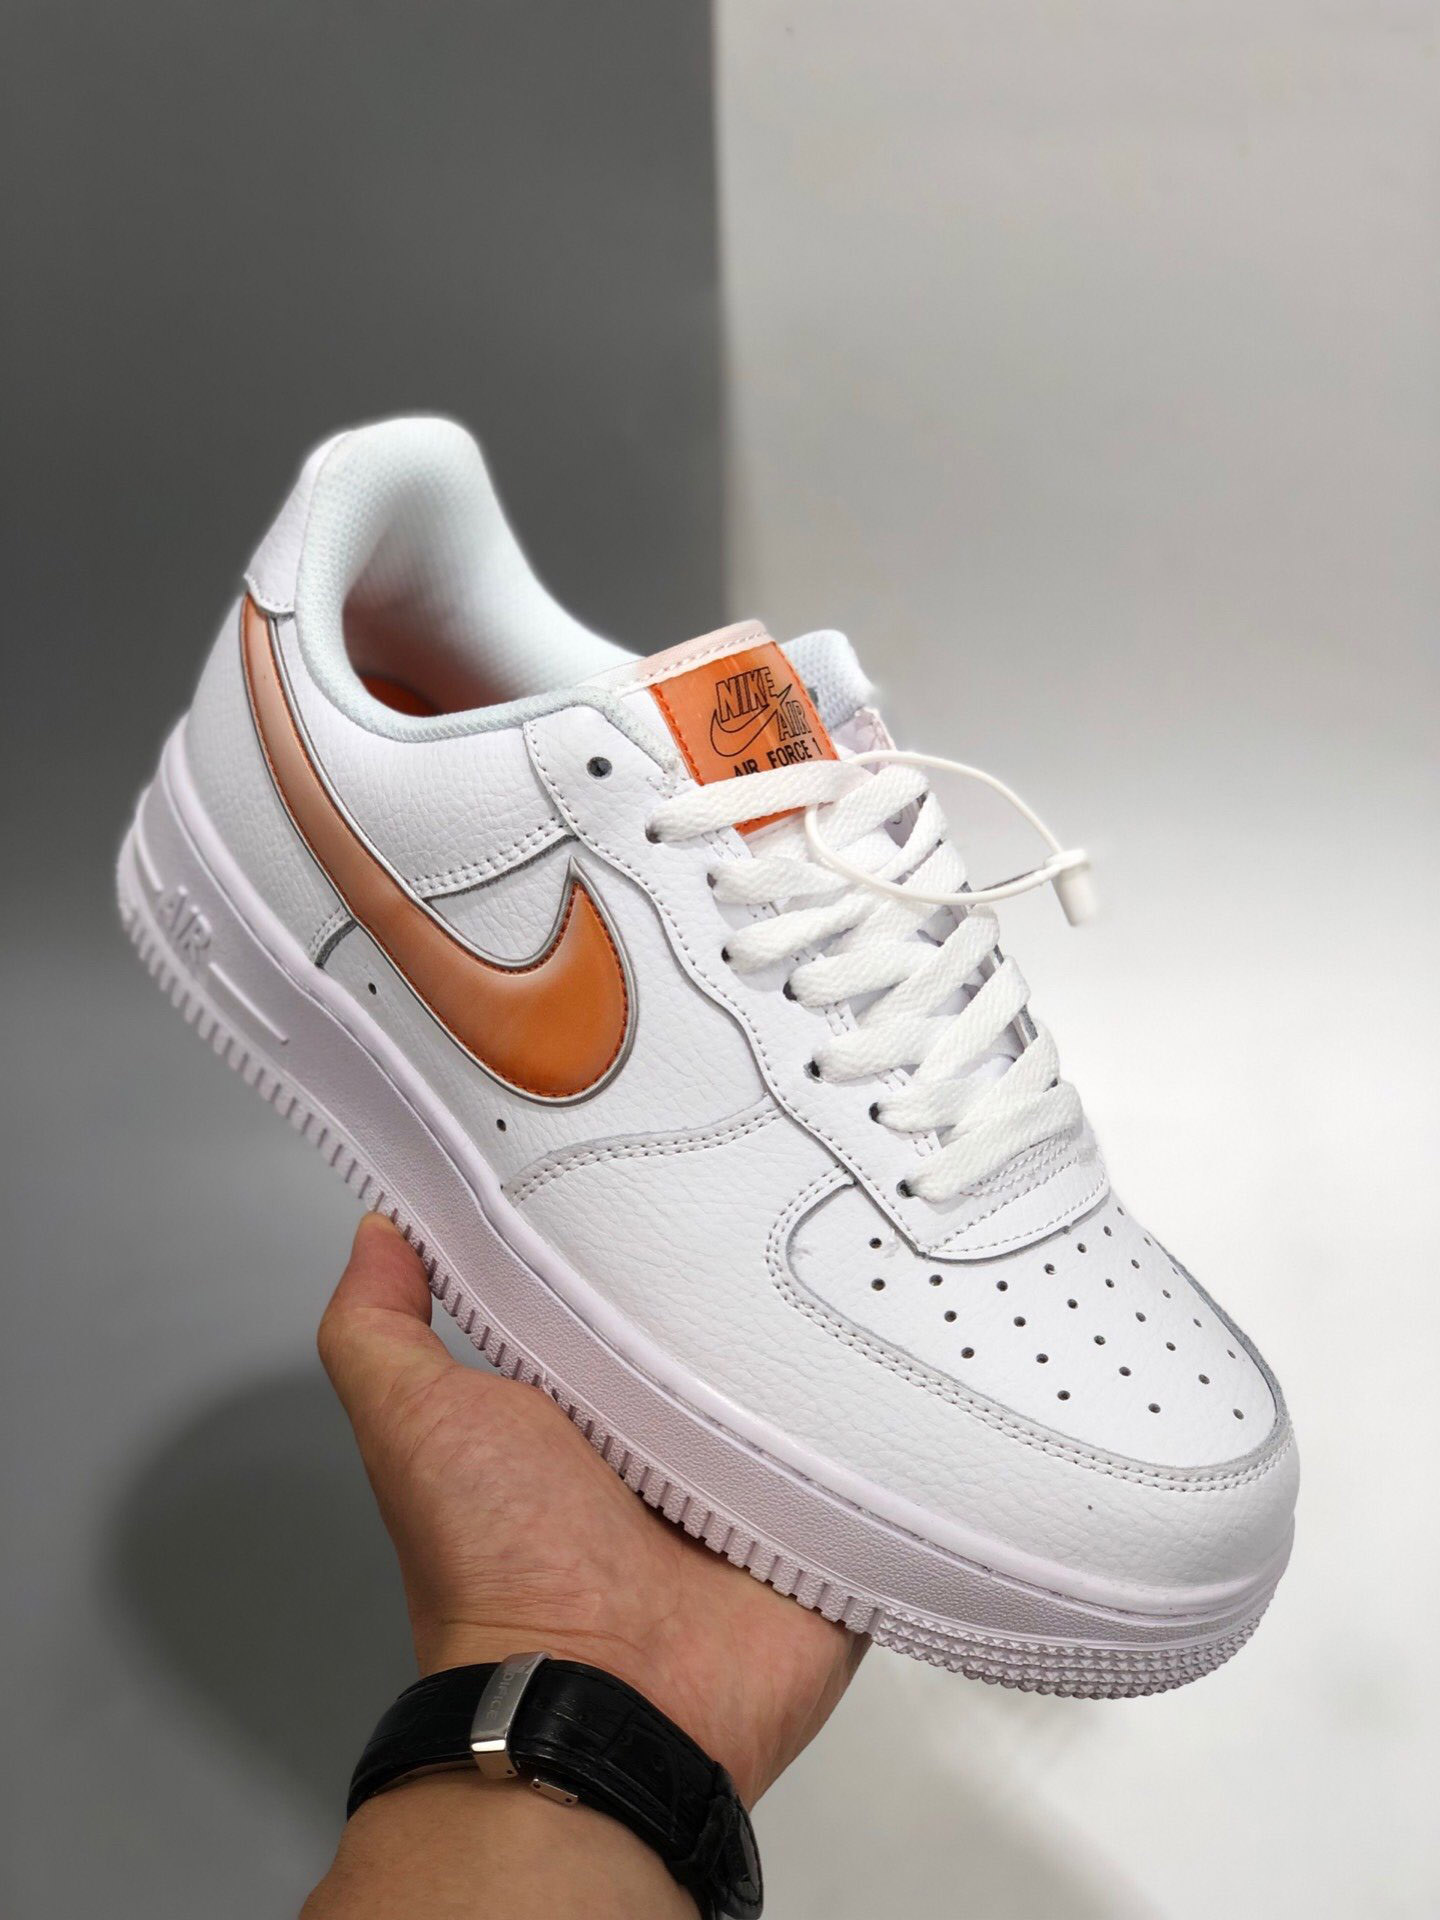 Nike Air Force 1 Low White/Orange Peel For Sale – Sneaker Hello